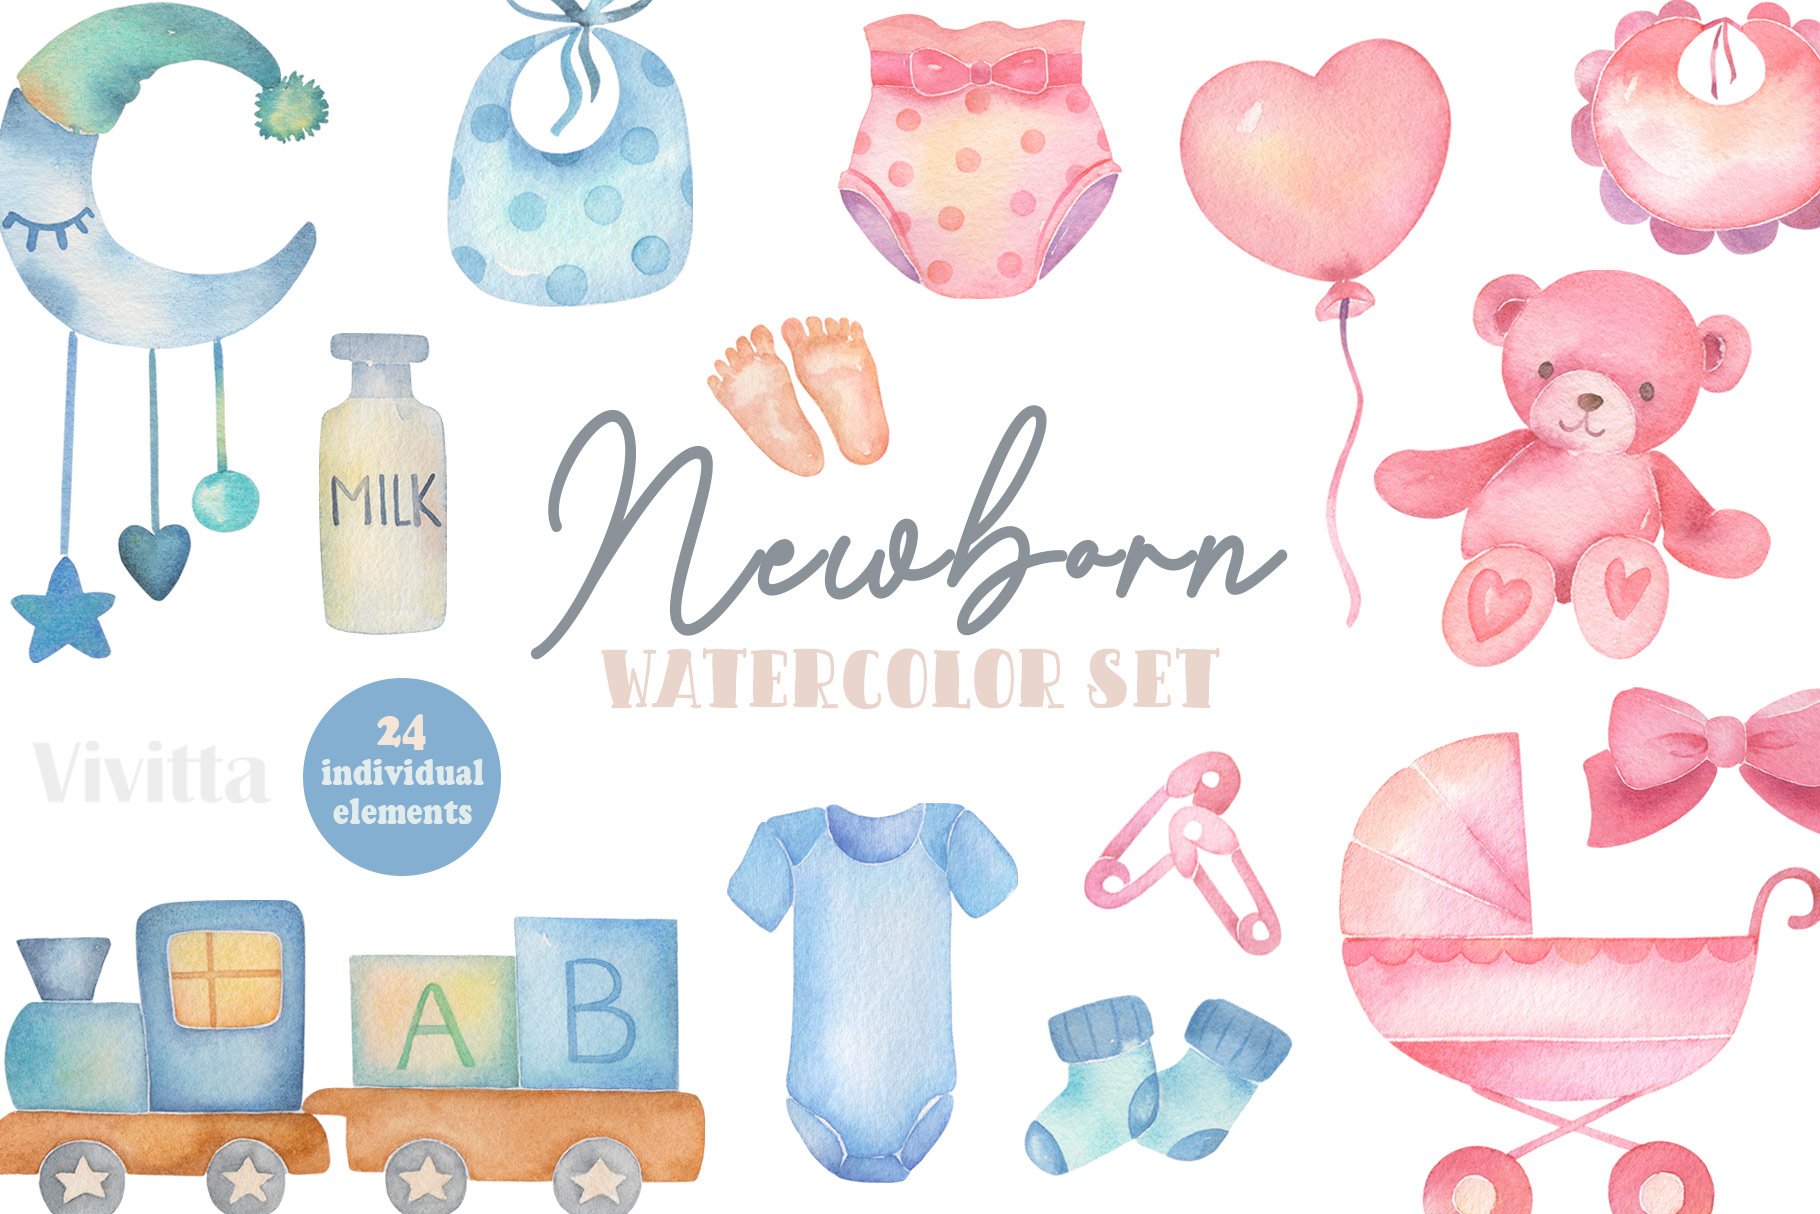 Newborn watercolor set, boy or girl cover image.